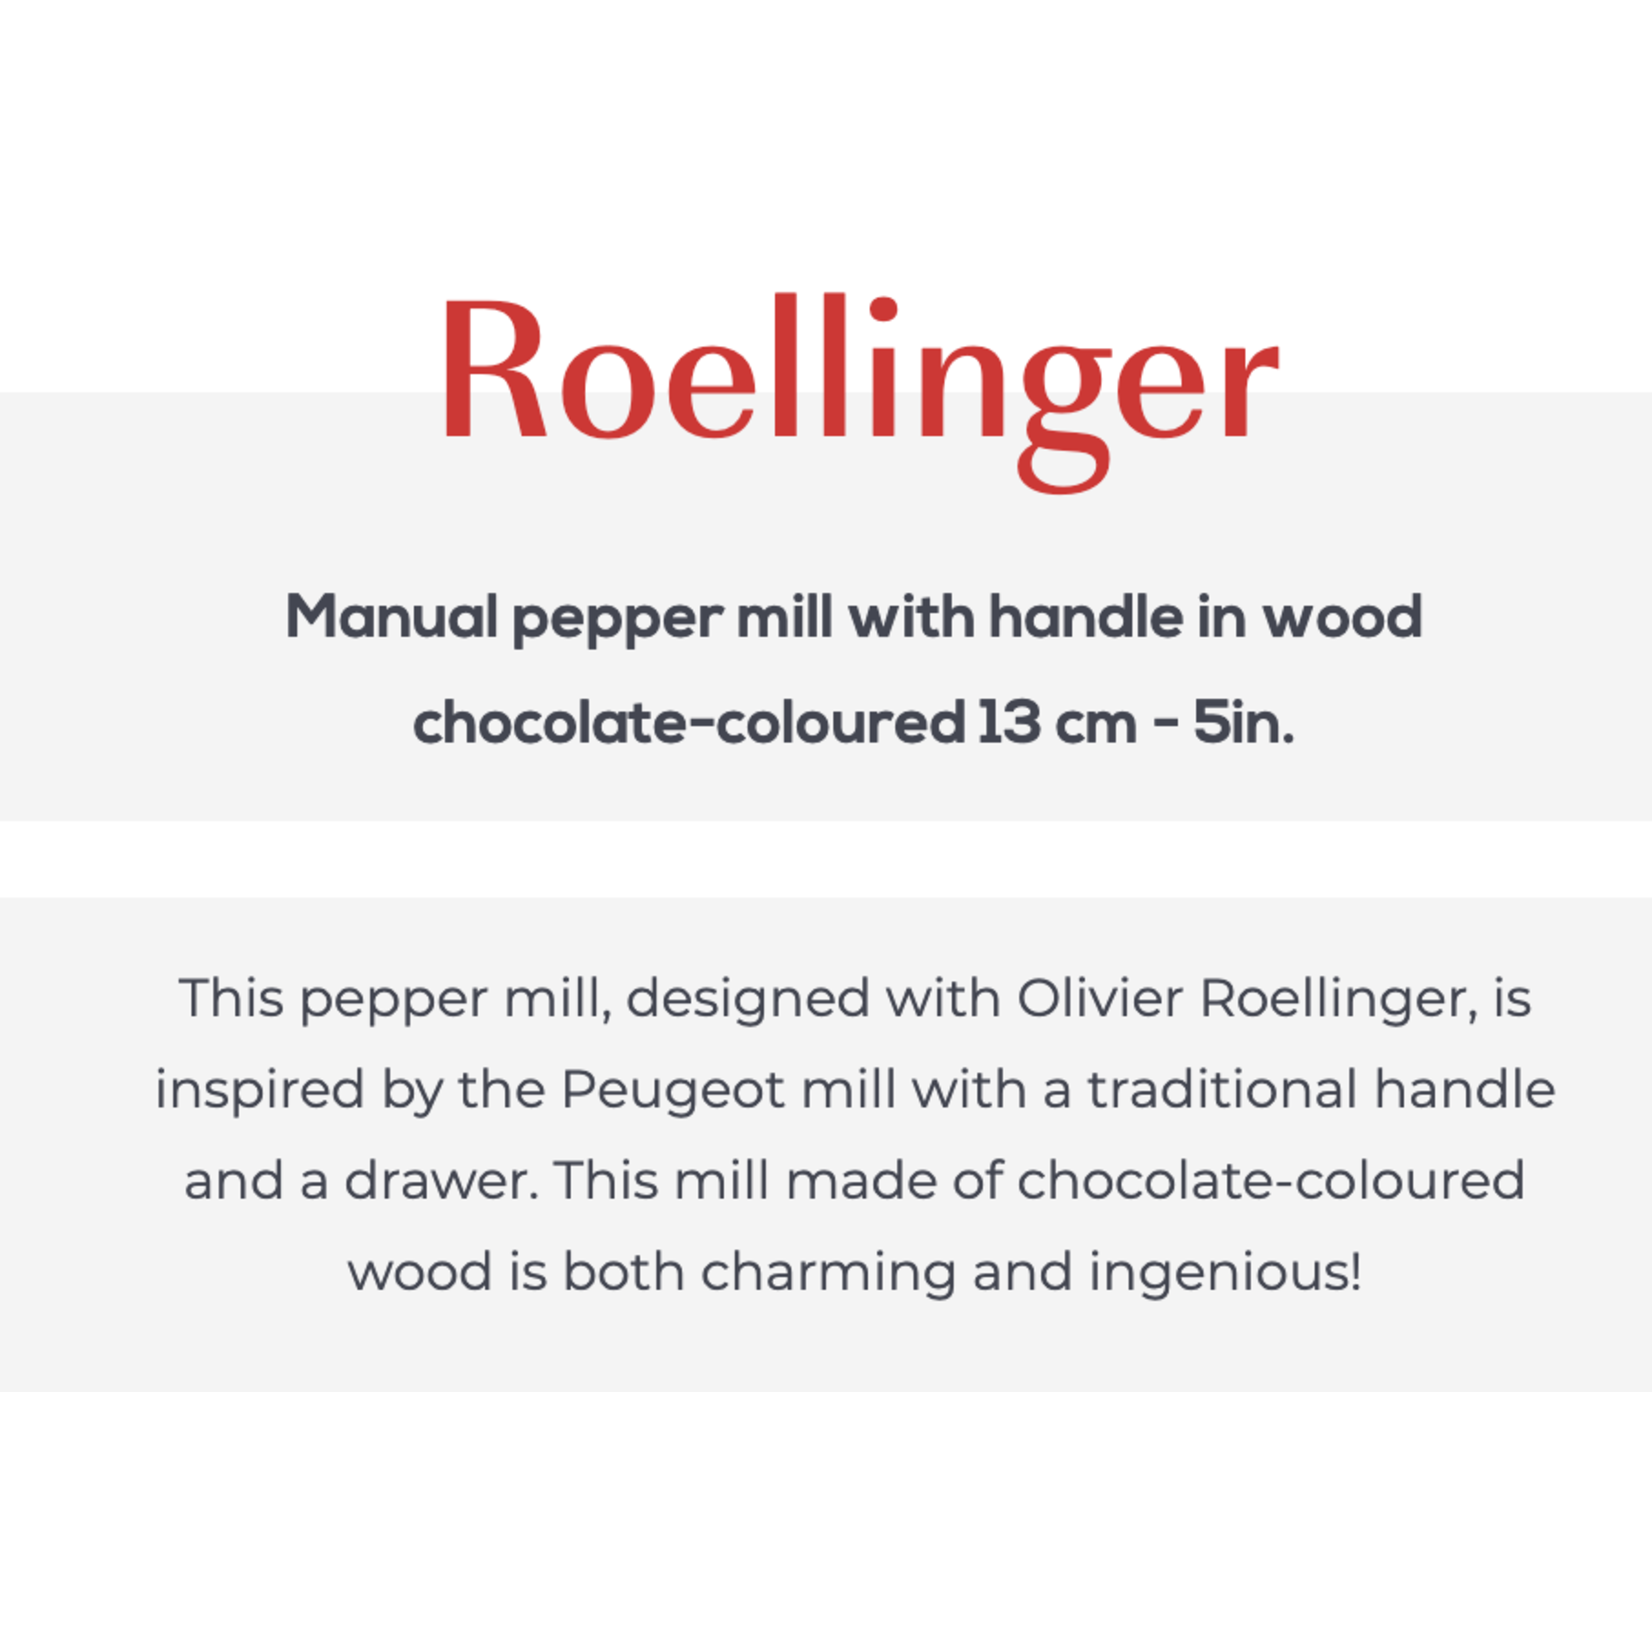 PEUGEOT PEUGEOT Roellinger Manual Pepper Mill - Chocolate